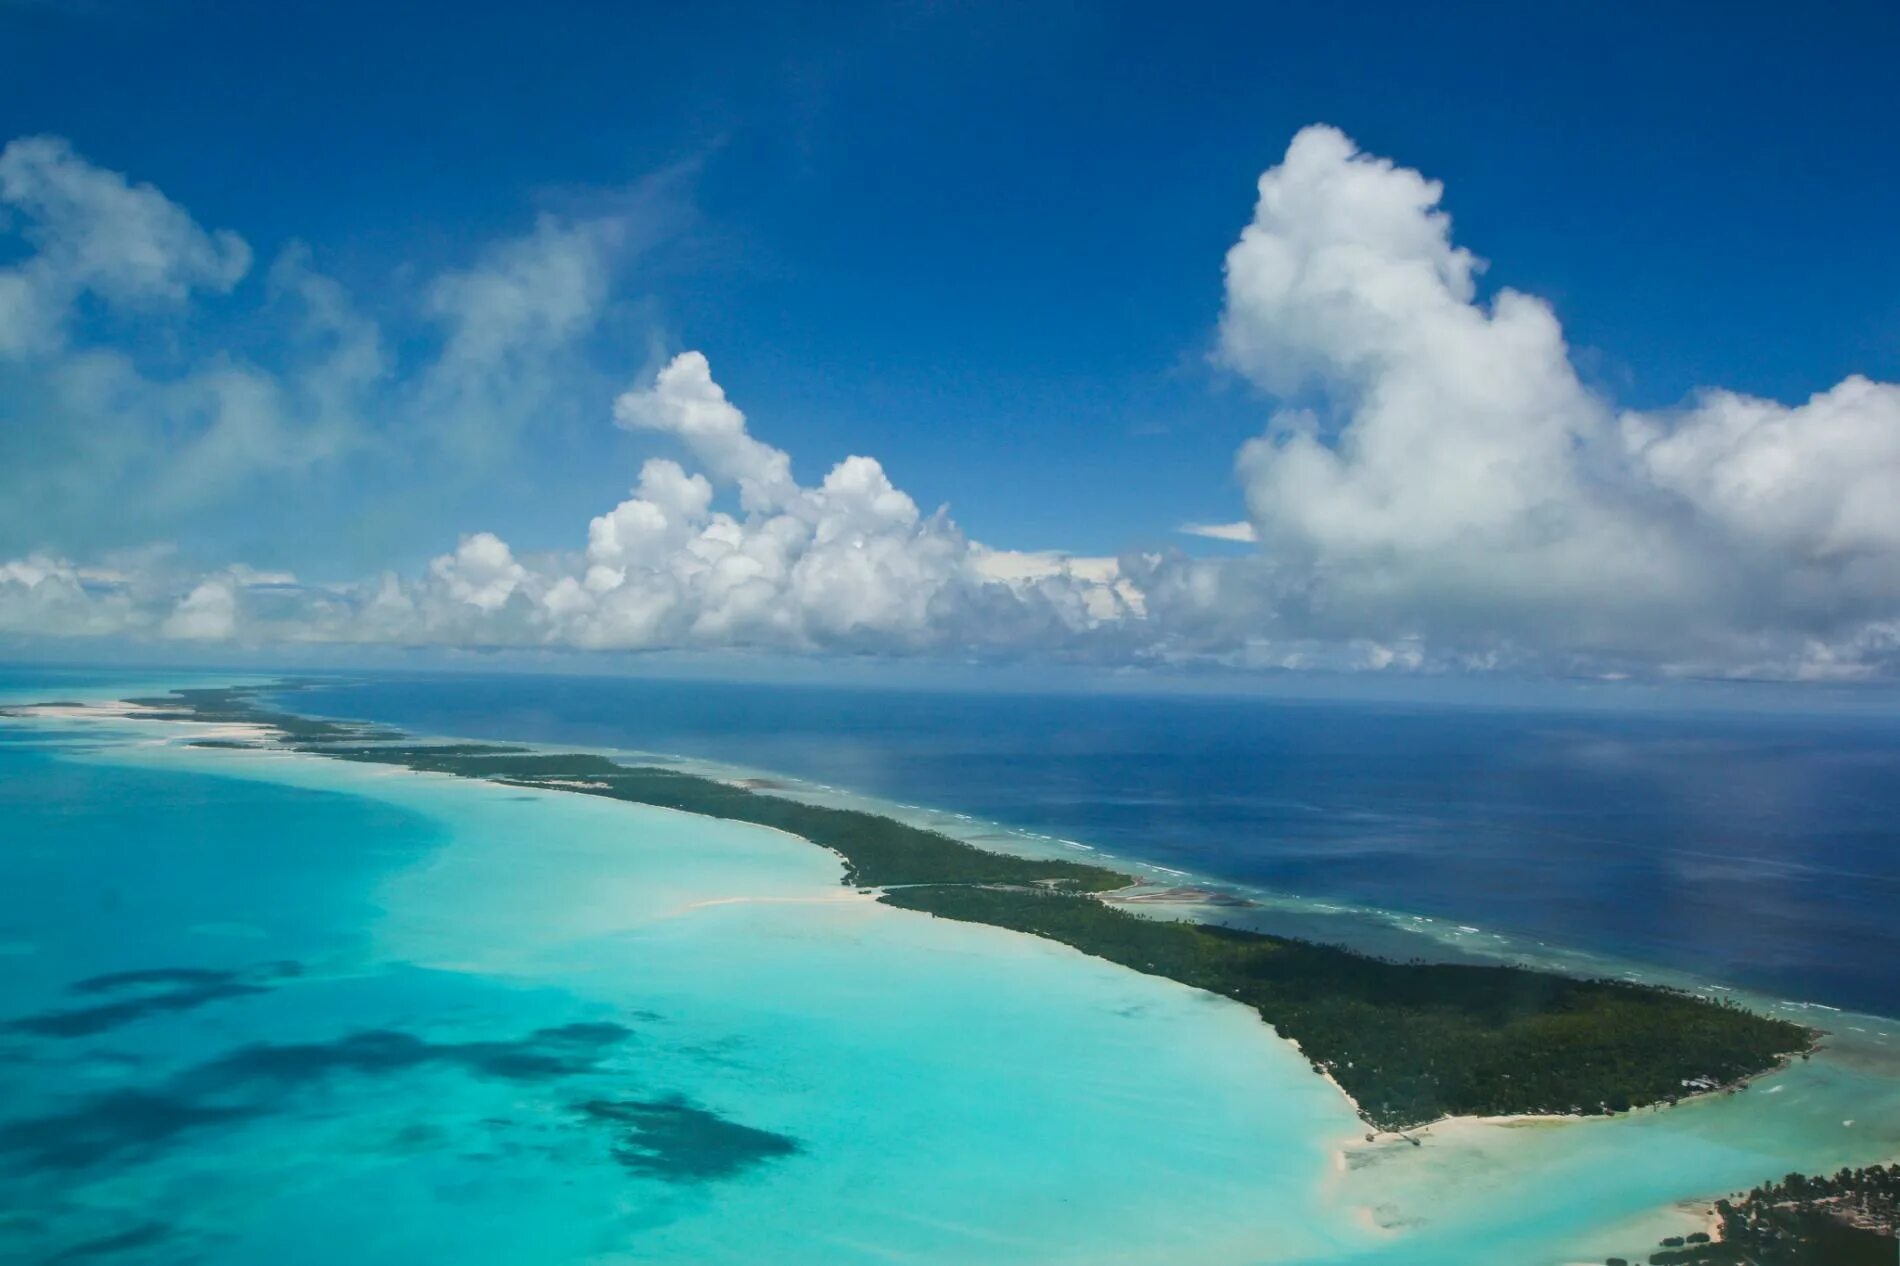 Атолл Кирибати. Кирибати остров Тарава. Атолл в тихом океане. Острова Гилберта, Кирибати. Назови остров тихого океана